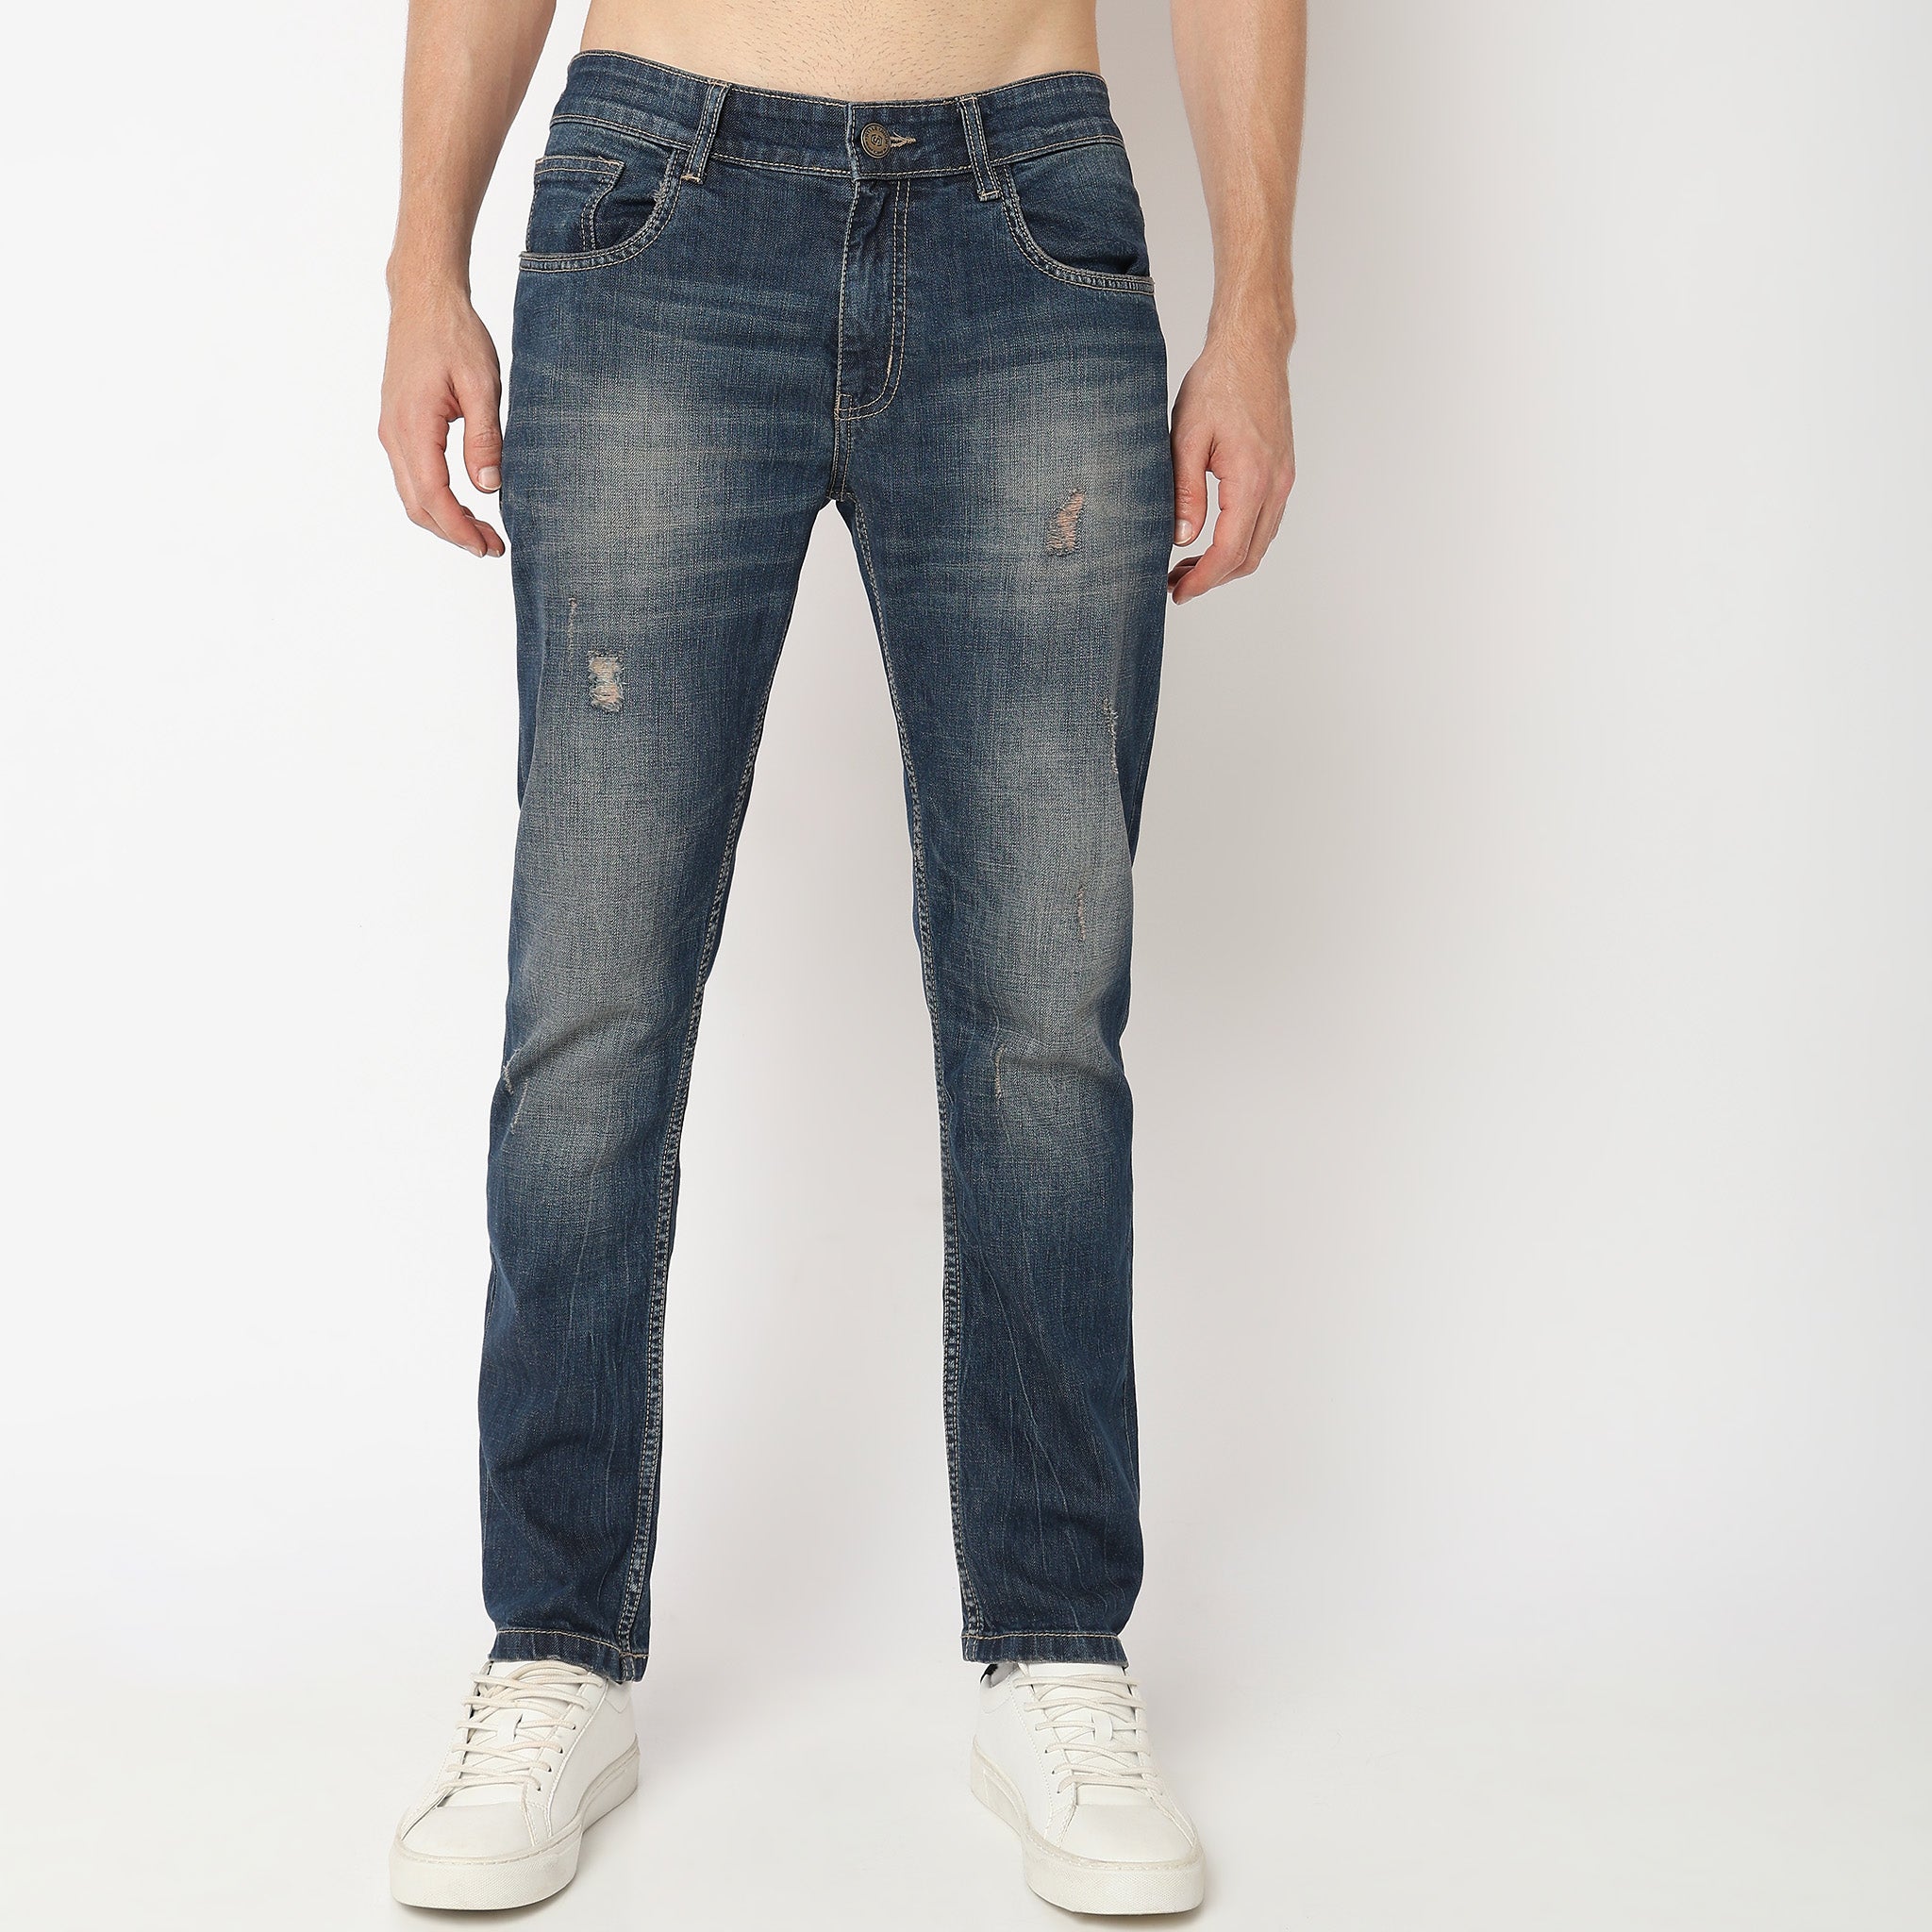 Men Wearing Slim Fit Embellished Low Rise Jean